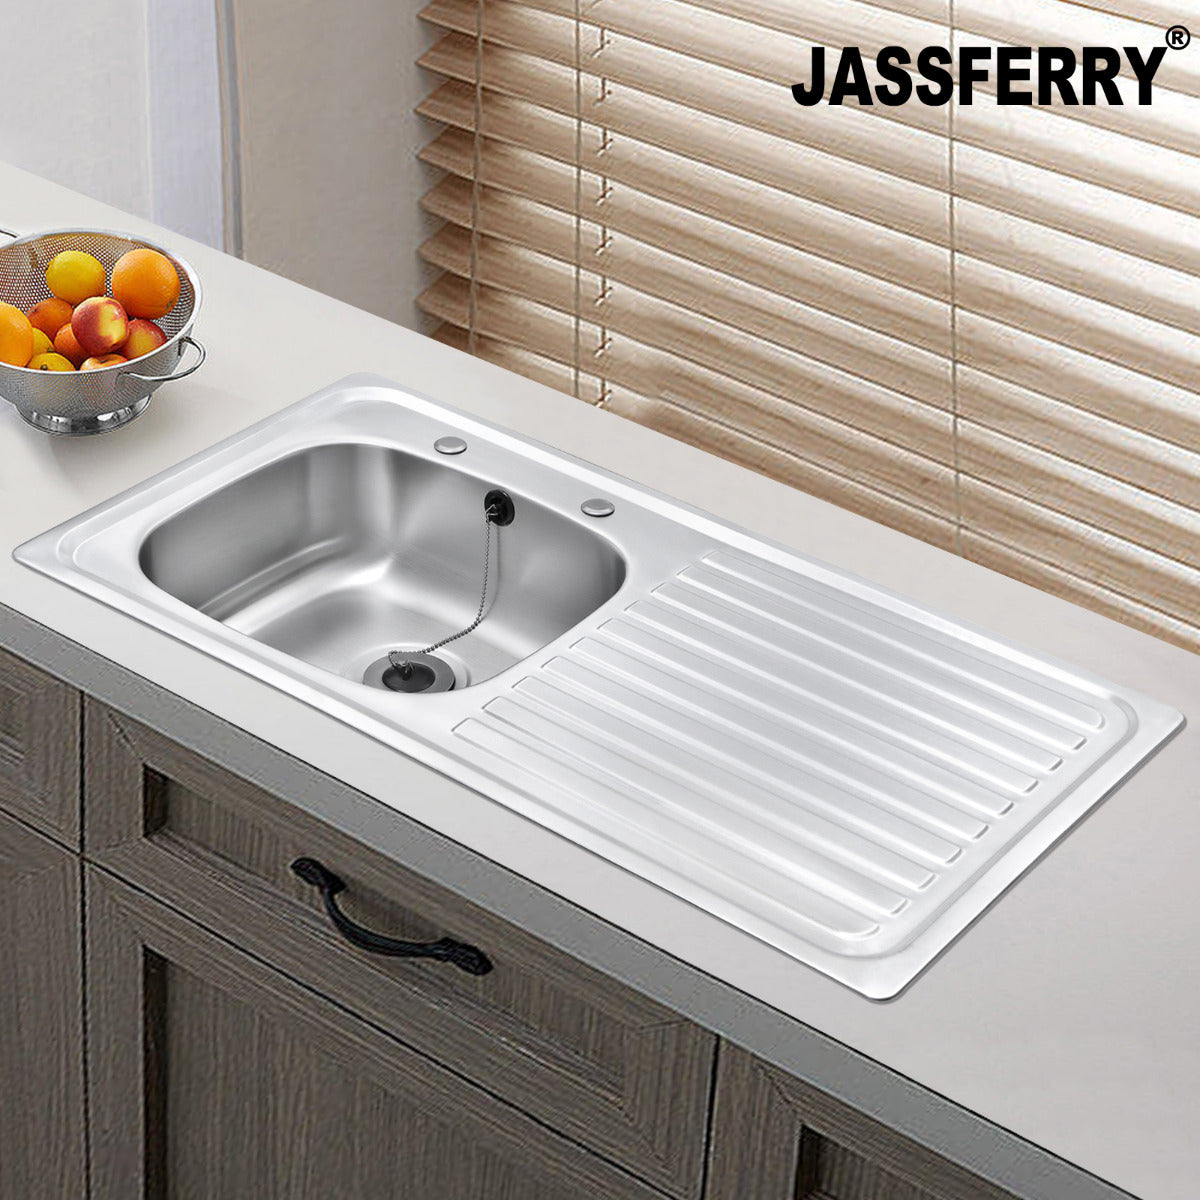 JassferryJASSFERRY Two Tap Holes Stainless Steel Kitchen Sink 1 Bowl Righthand DrainerKitchen Sinks